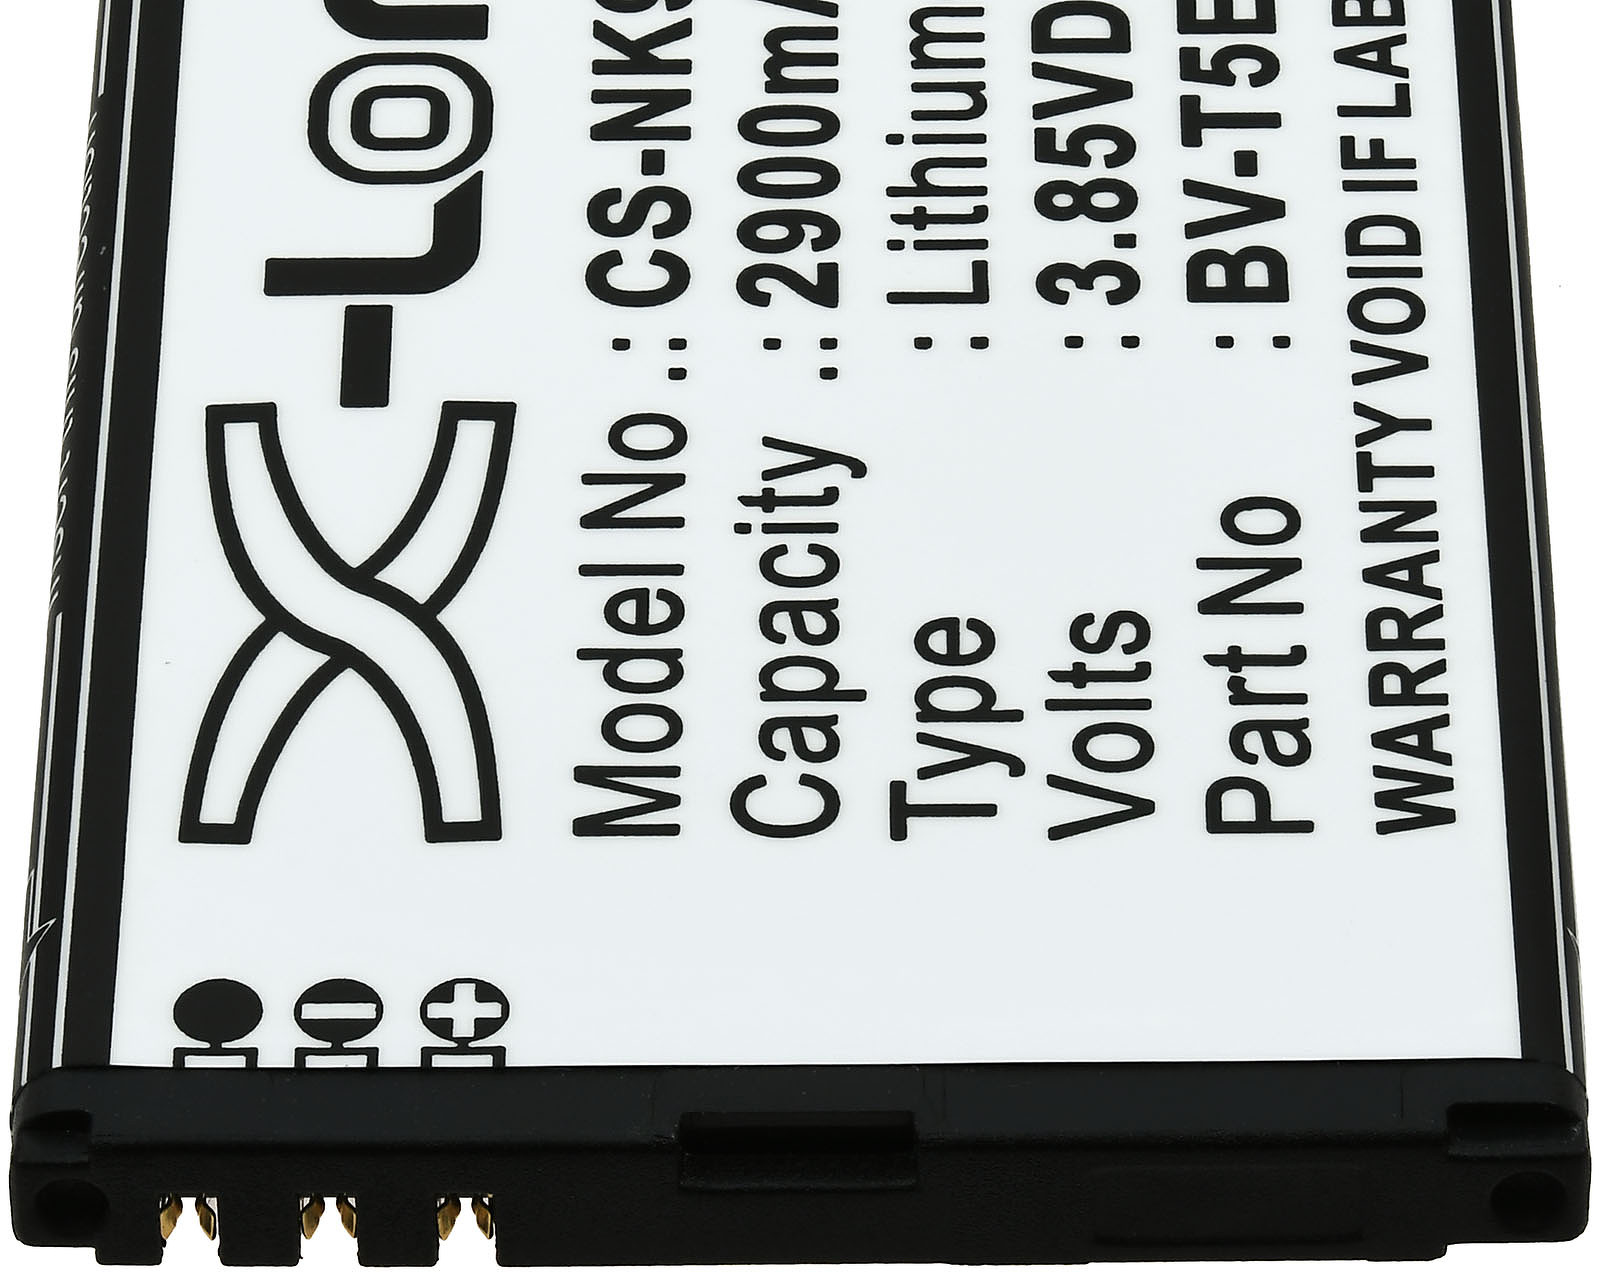 Akku, Li-Ion 2900mAh Volt, POWERY 950 3.85 Lumia Nokia Akku für